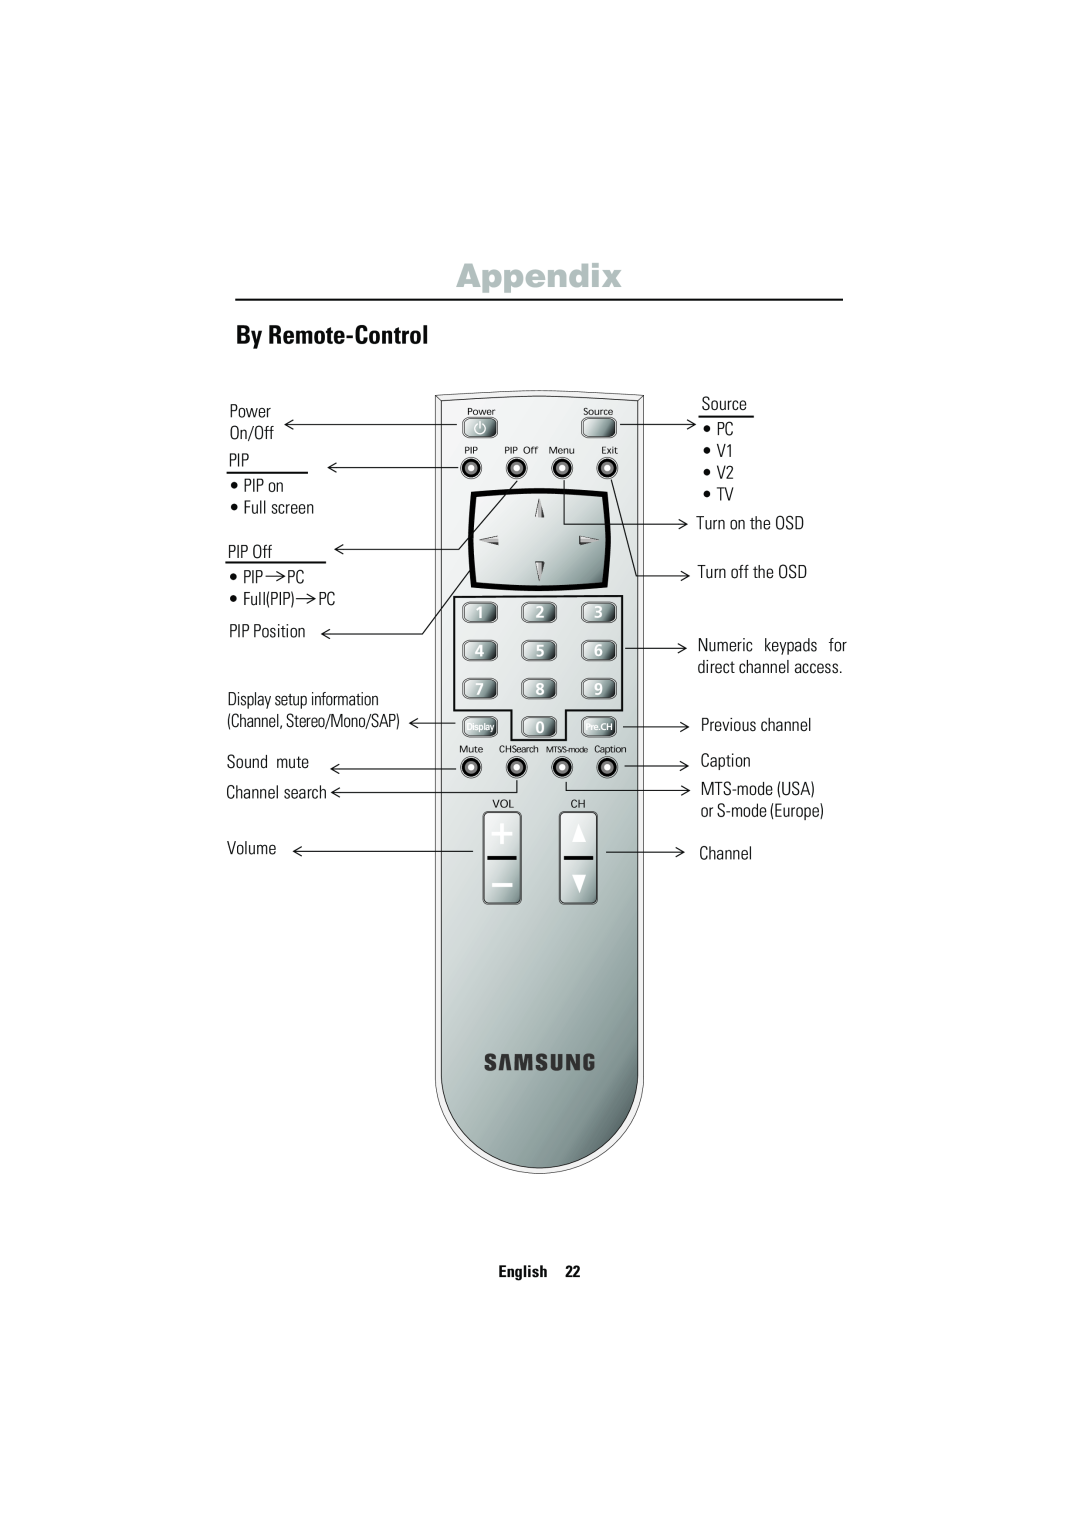 Samsung 150MP manual By Remote-Control, Appendix, English, Display, Pre.CH 